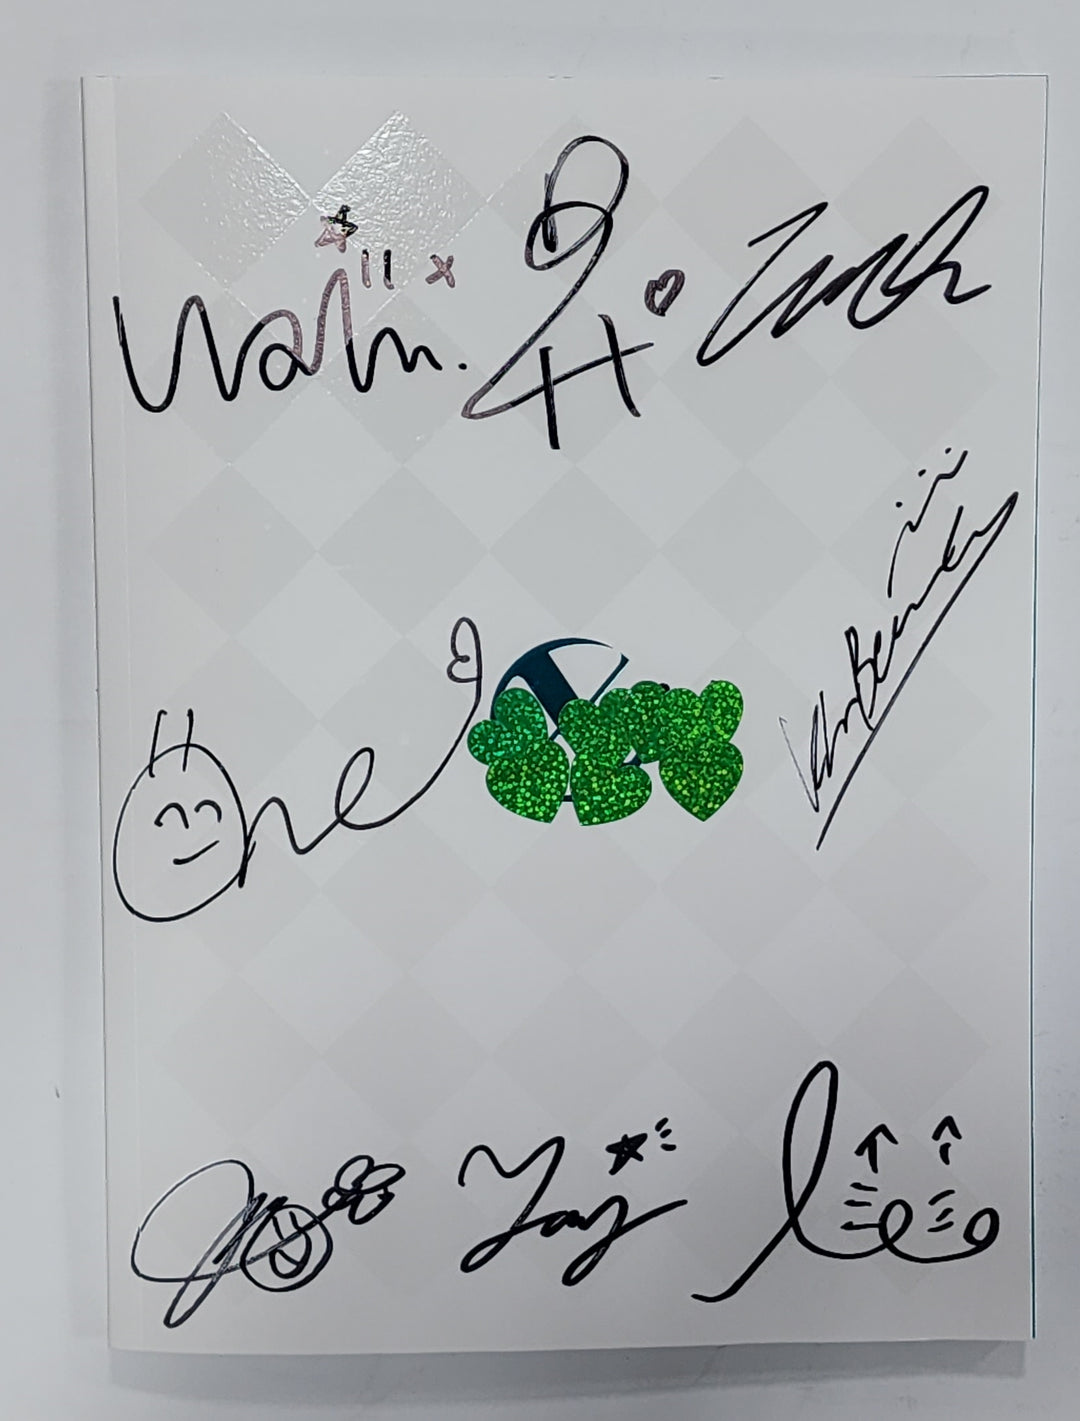 XODIAC "Throw a Dice" - Hand Autographed(Signed) Album